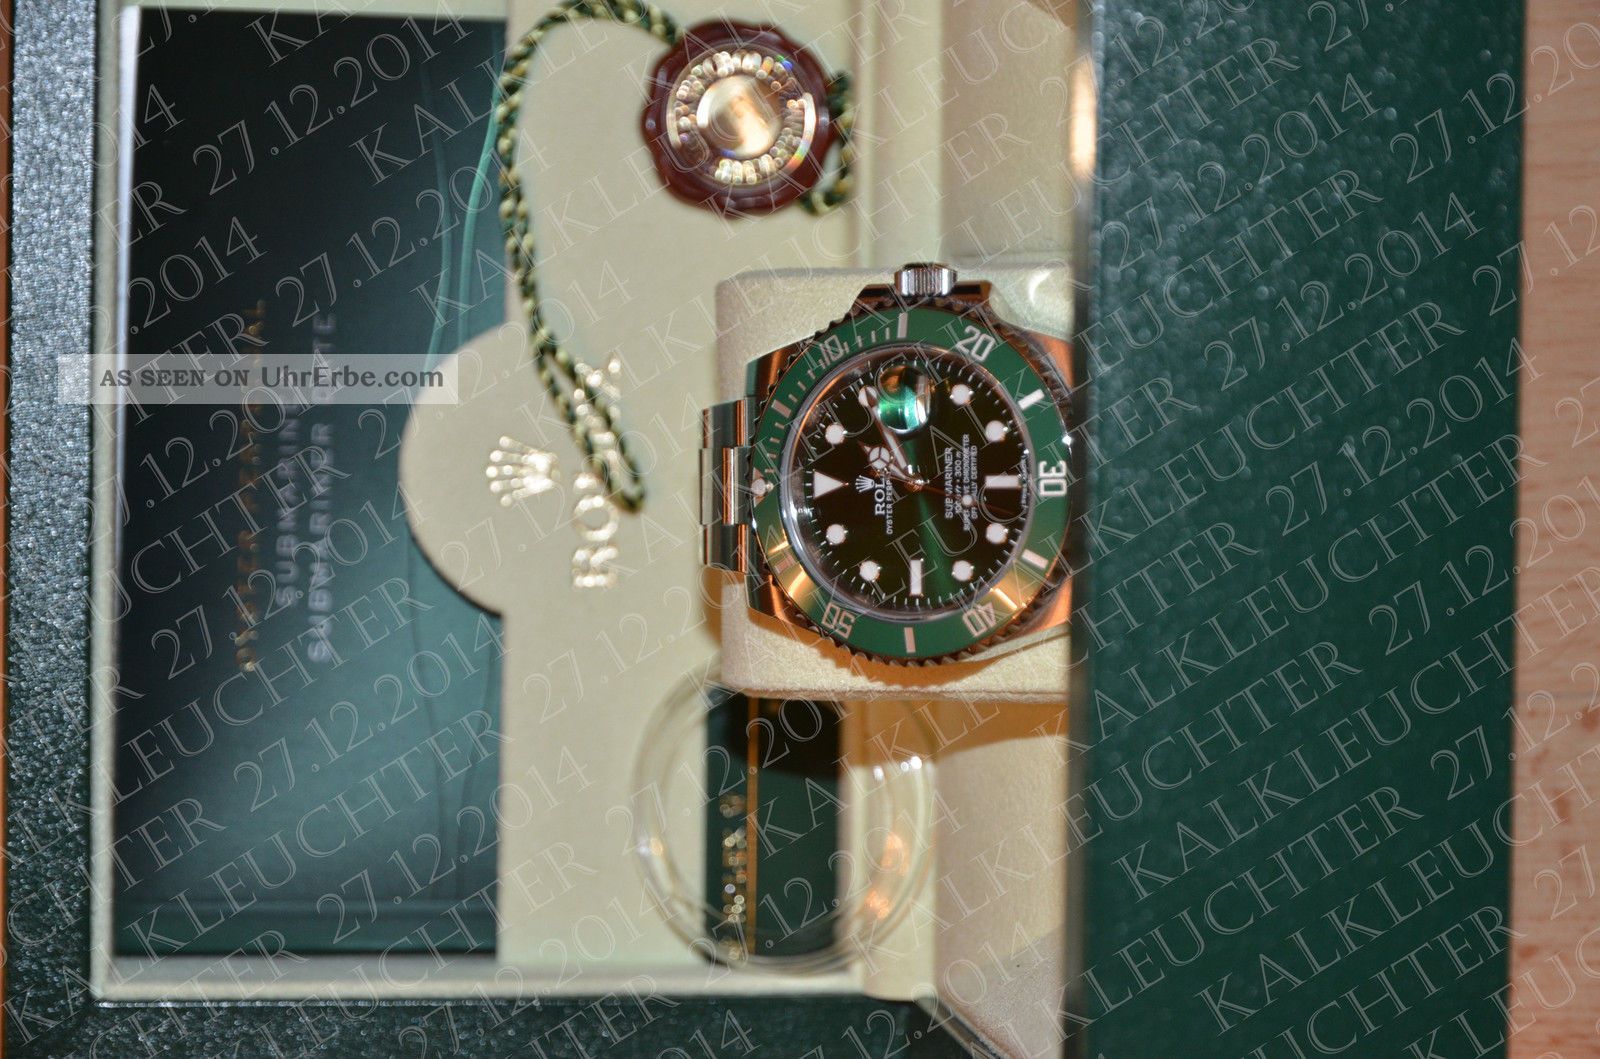 Rolex Oyster Perpetual Submariner Date Armbanduhr Für Herren (116610lv) Armbanduhren Bild